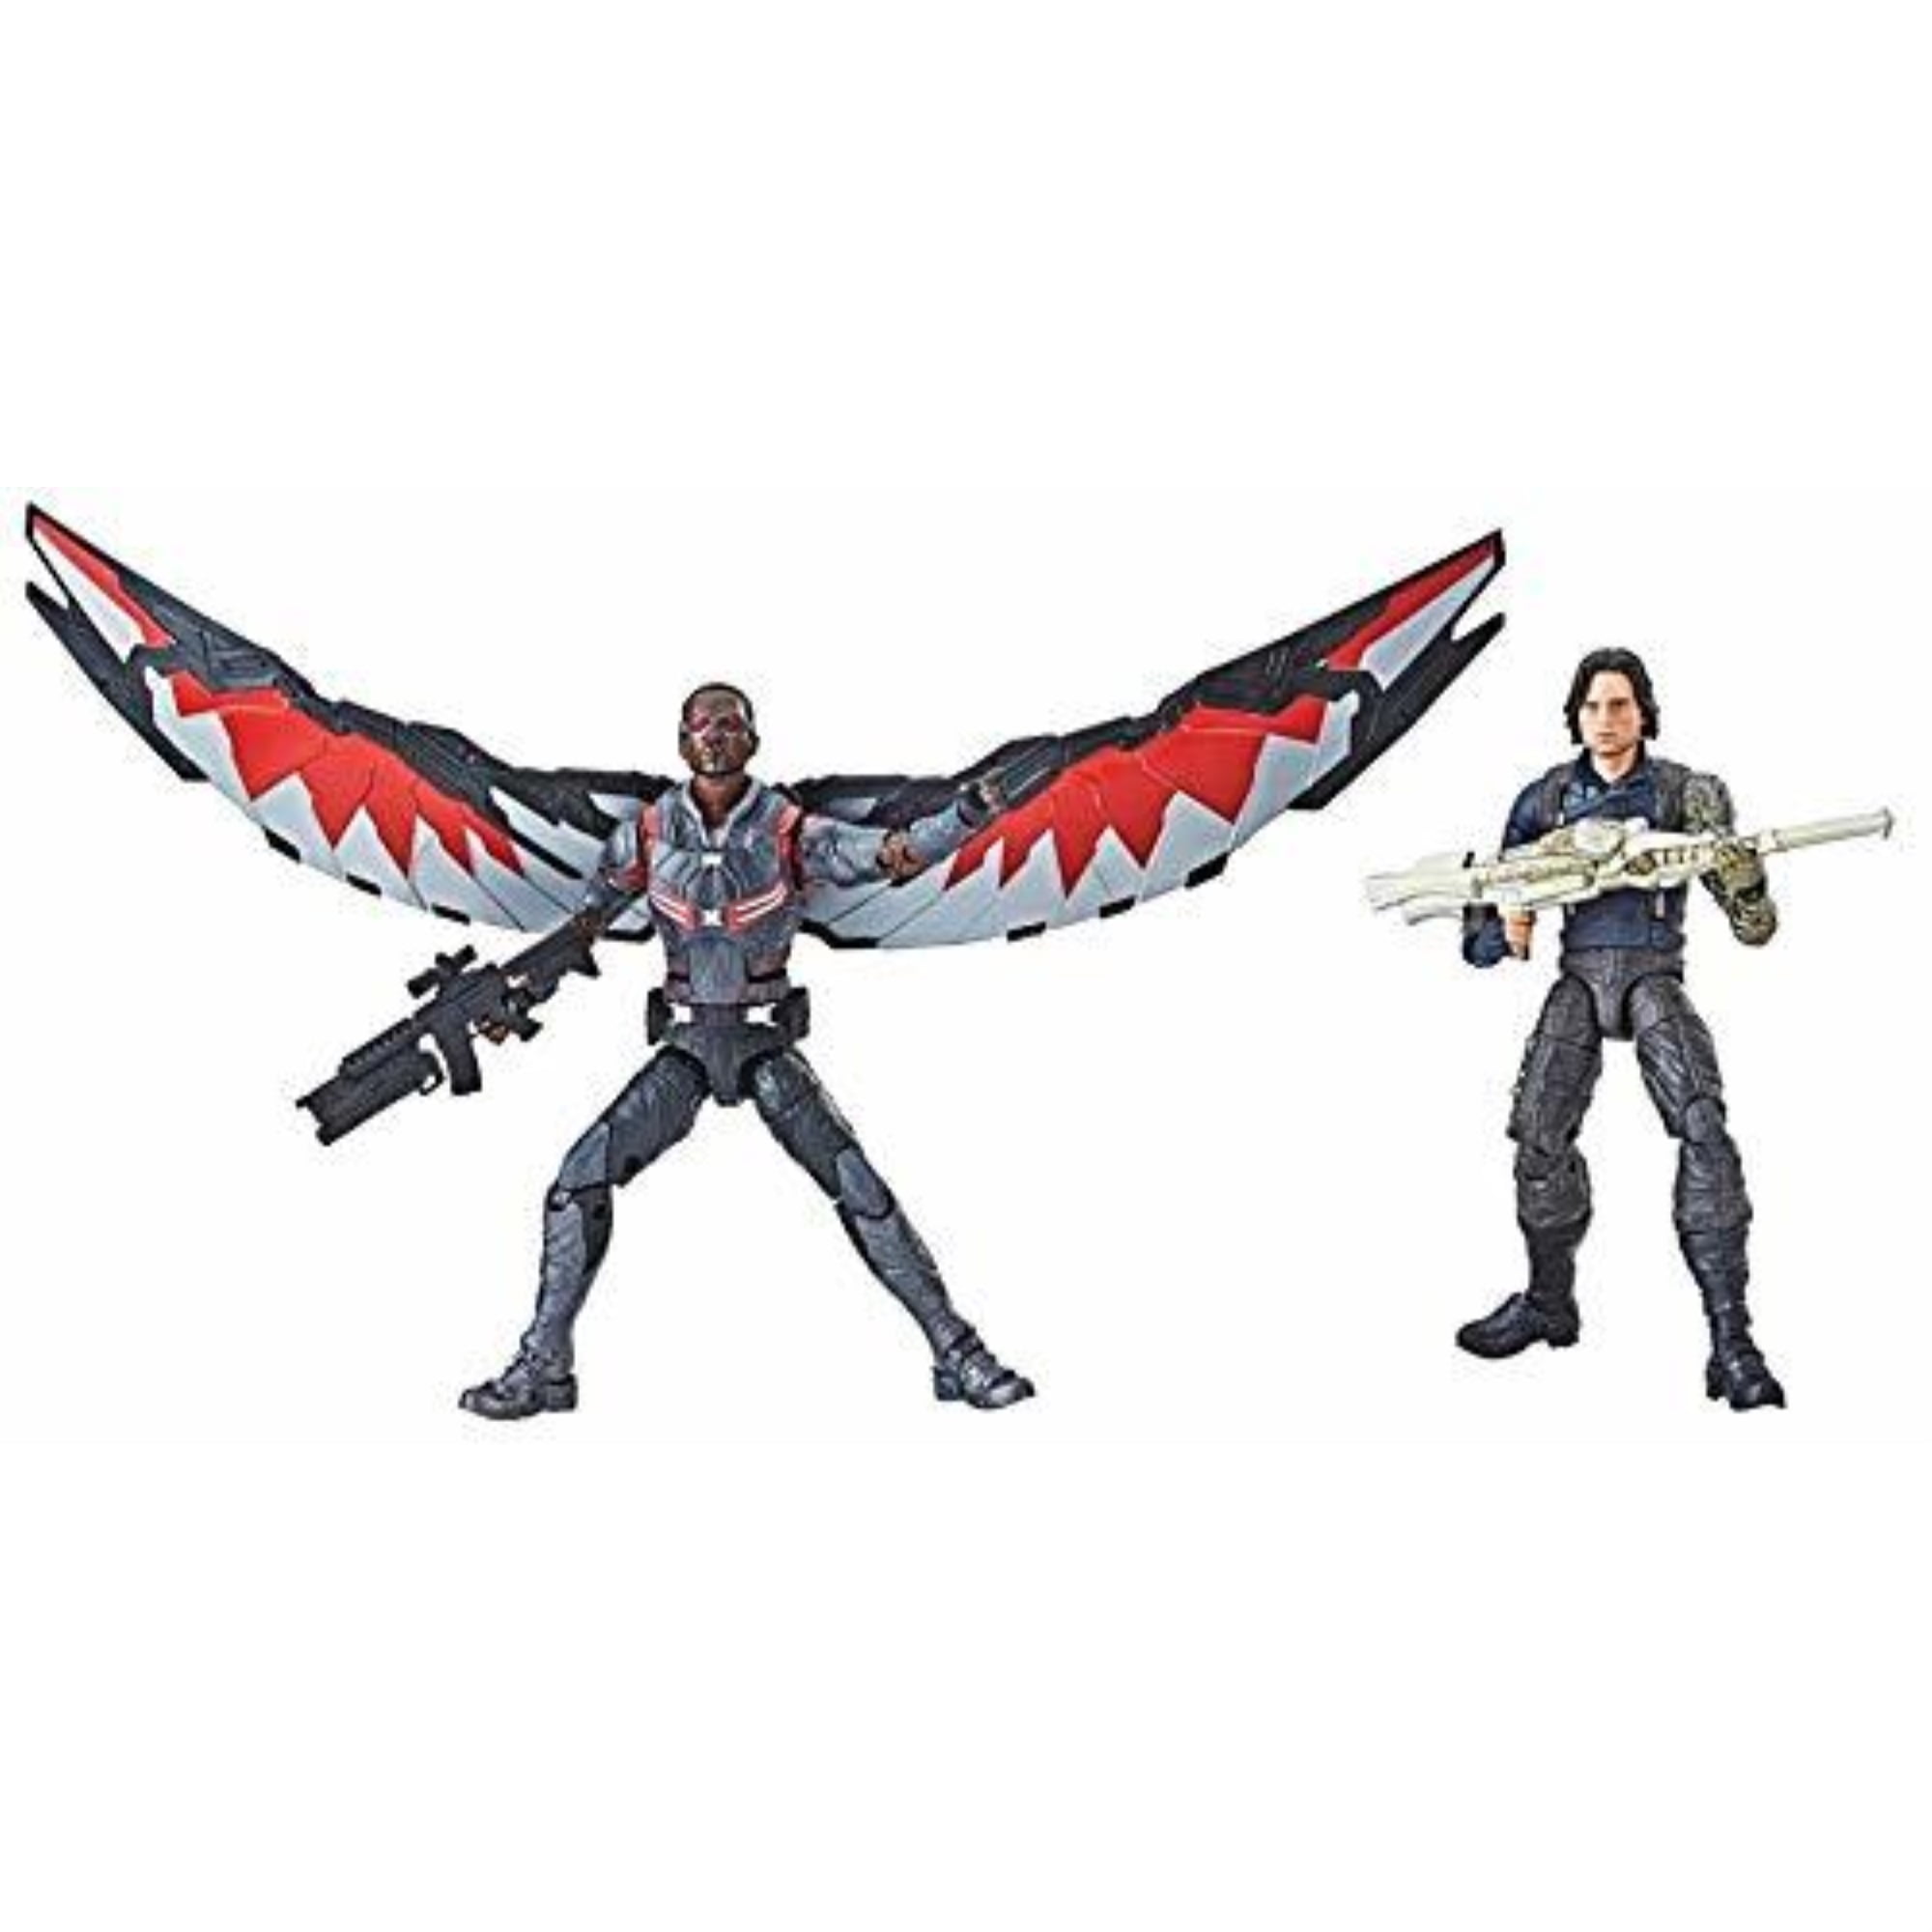 Set 5 x Avengers Captain America Ant-Man Falcon Winter Soldier Action Figure Toy 